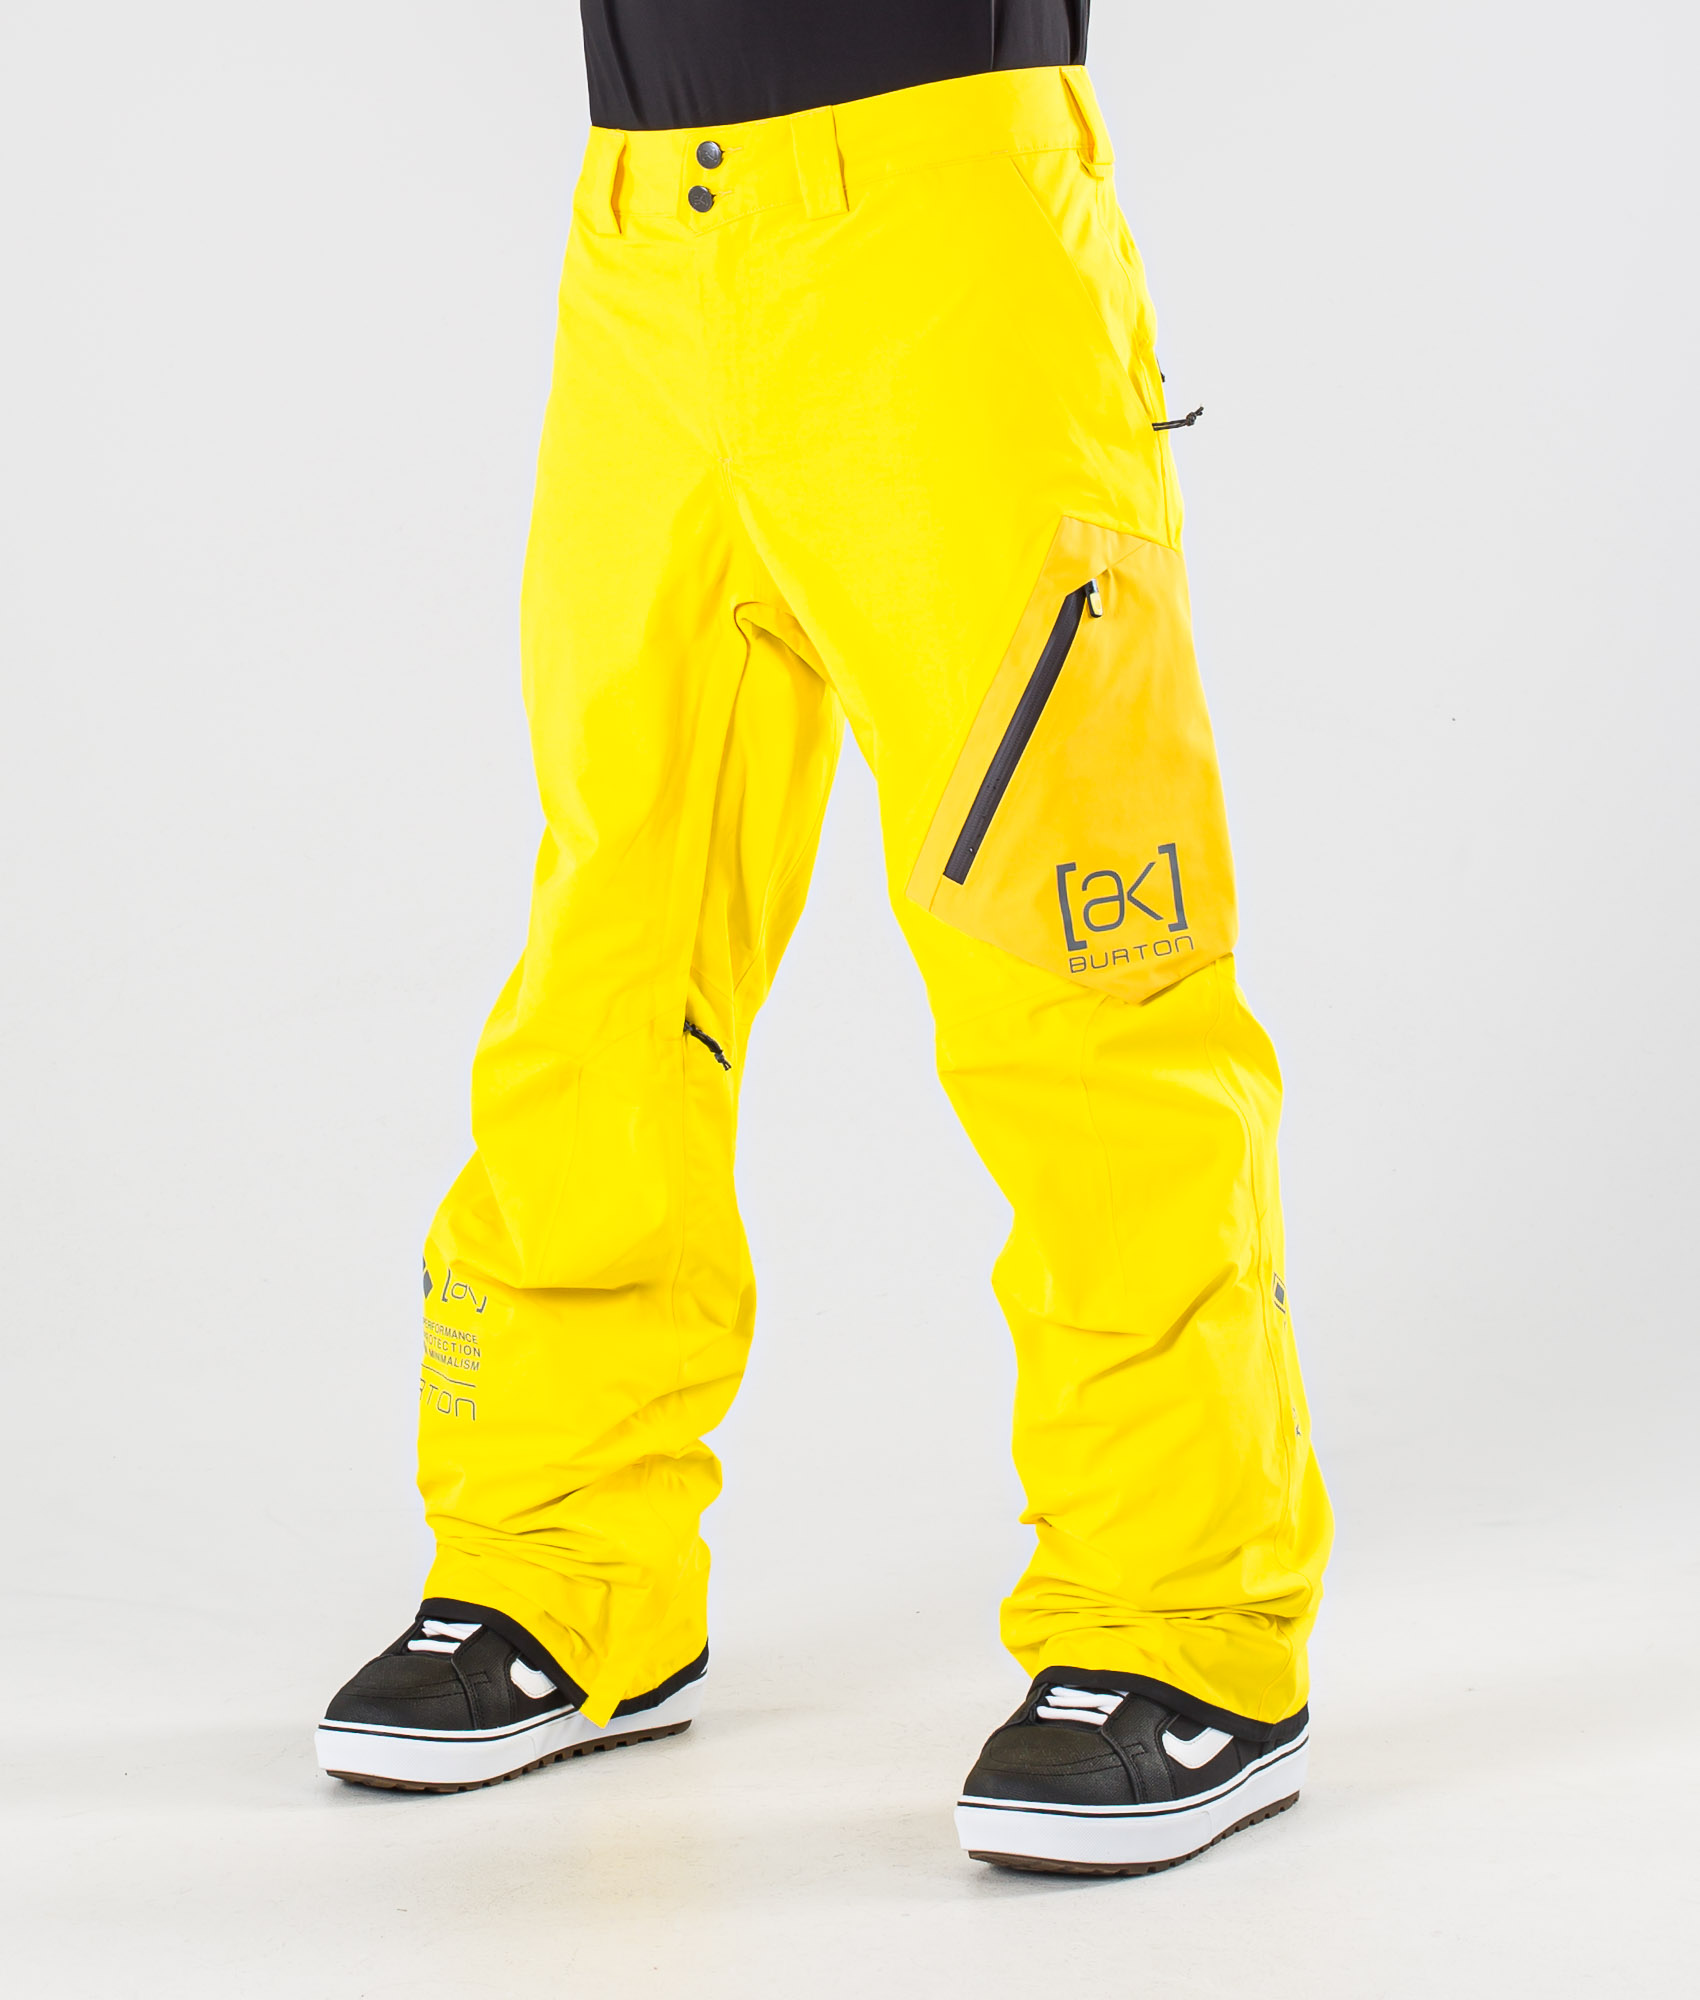 Diakritisch Acteur Reiziger Burton AK GoreTex Cyclic Snowboard Broek Heren Cyber Yellow/Spectra Yellow  - Geel | Ridestore.com